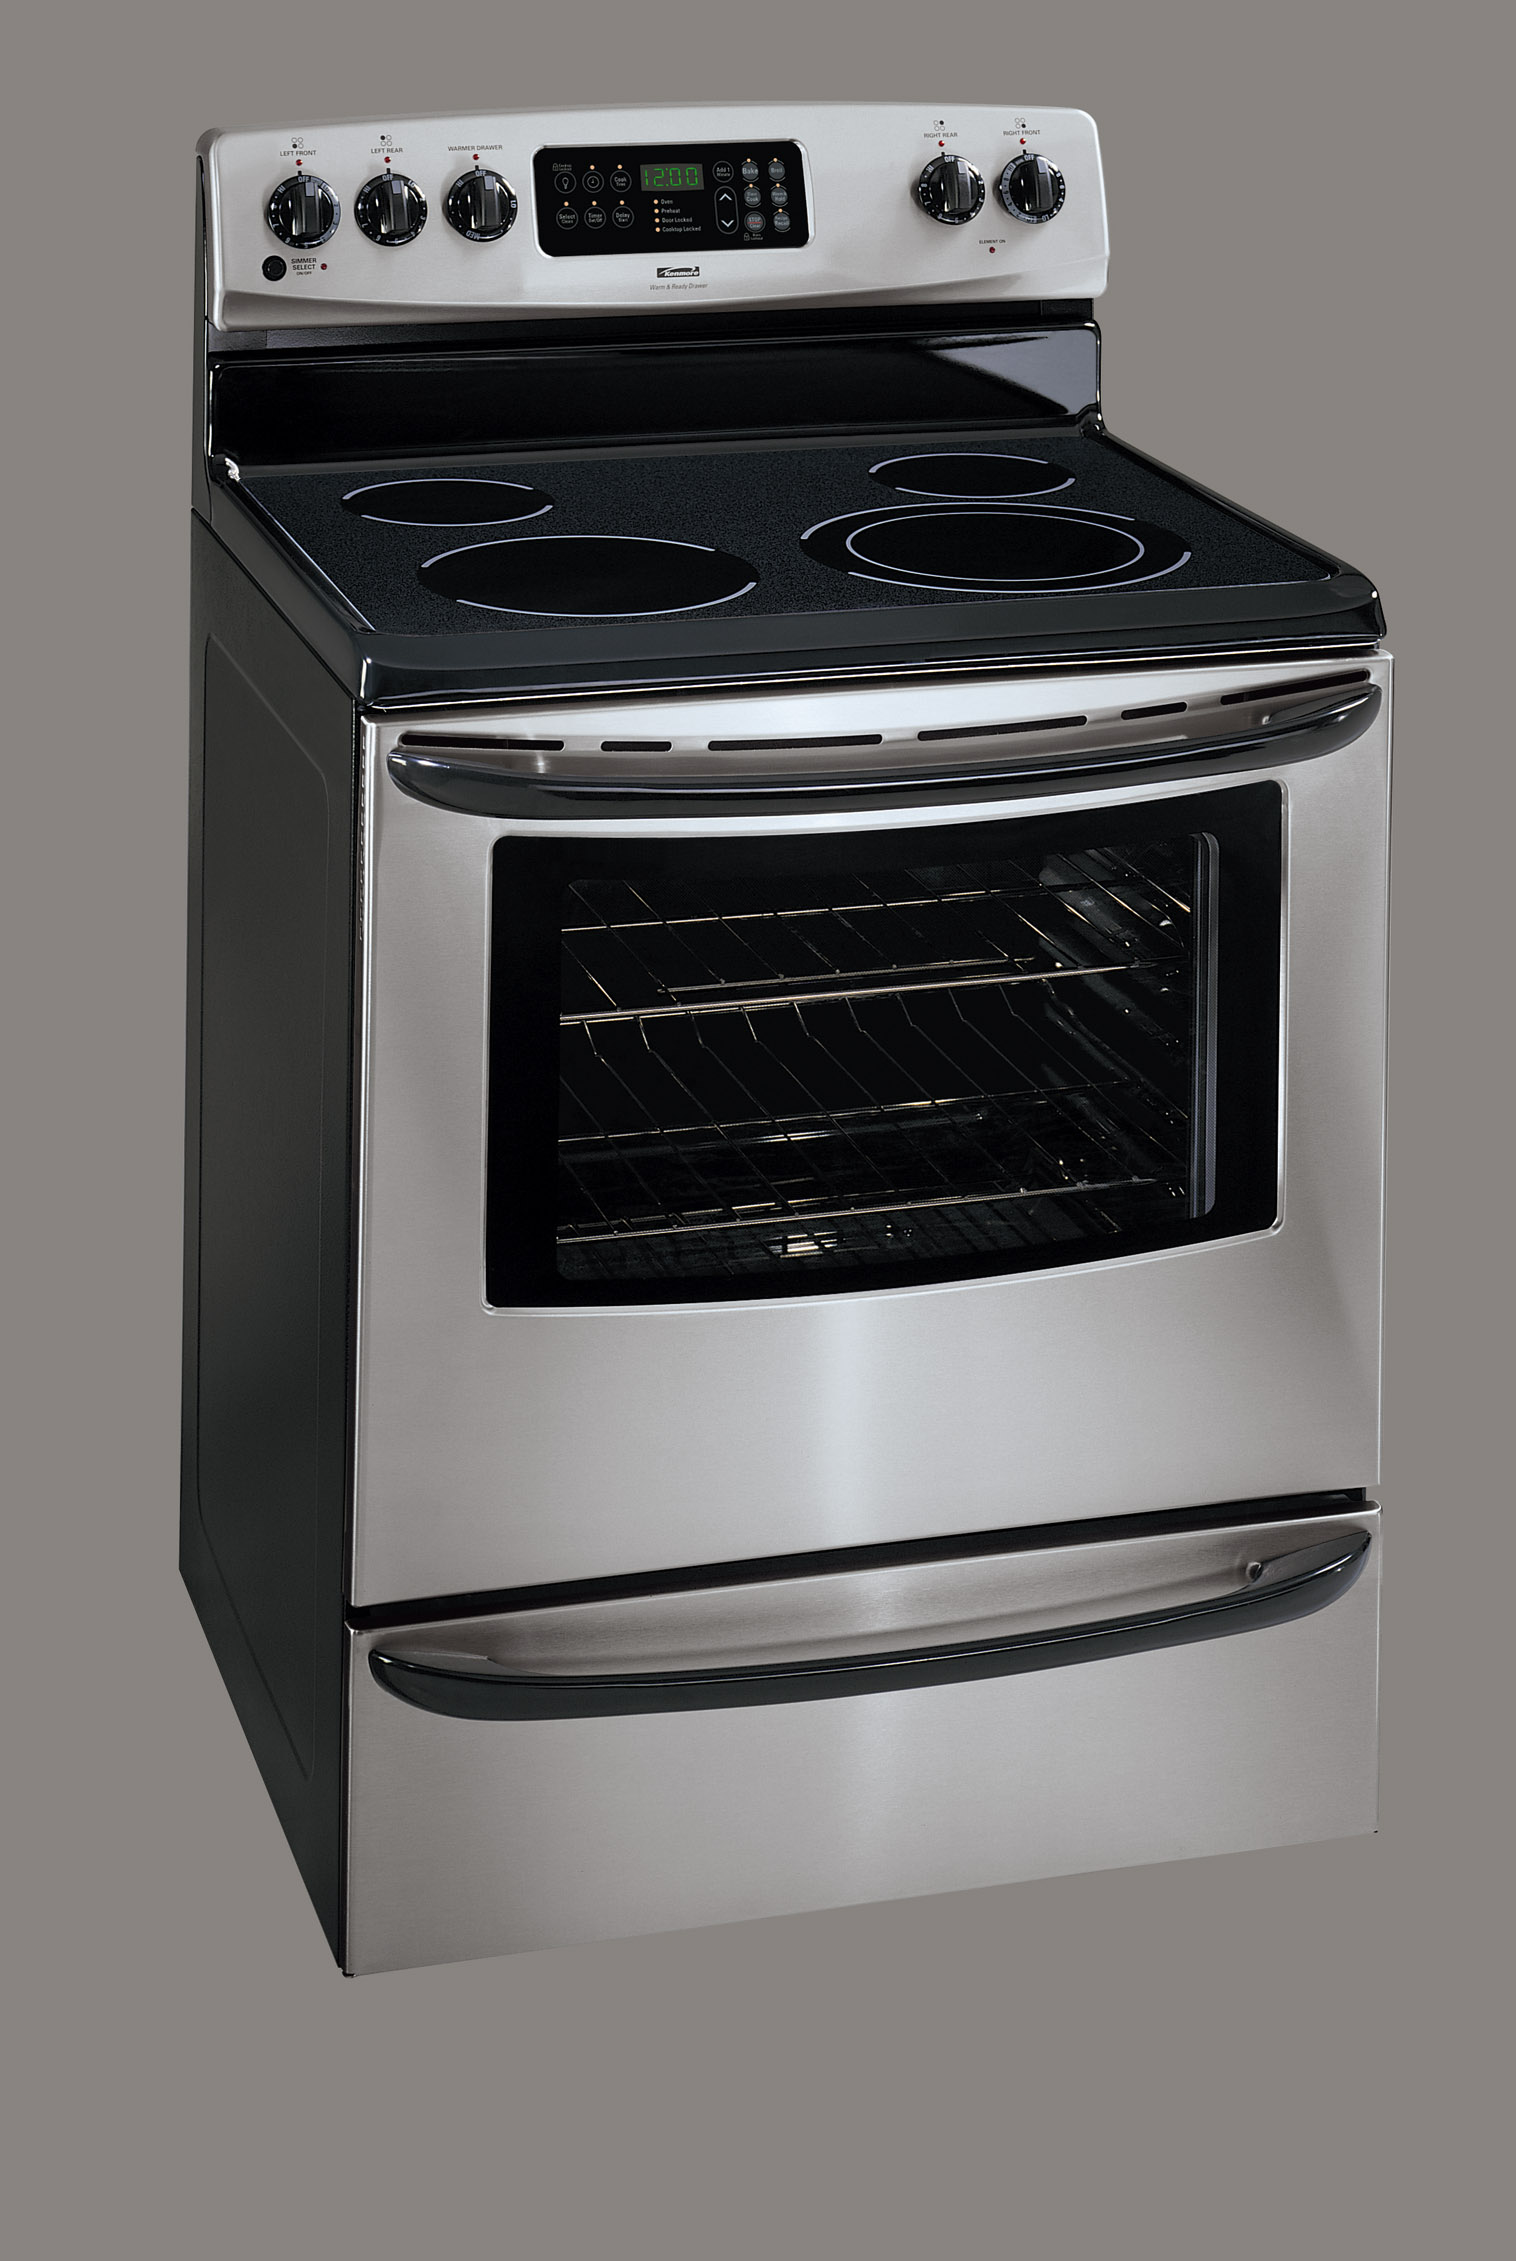 kenmore-range-stove-oven-model-790-96513402-parts-and-repair-help